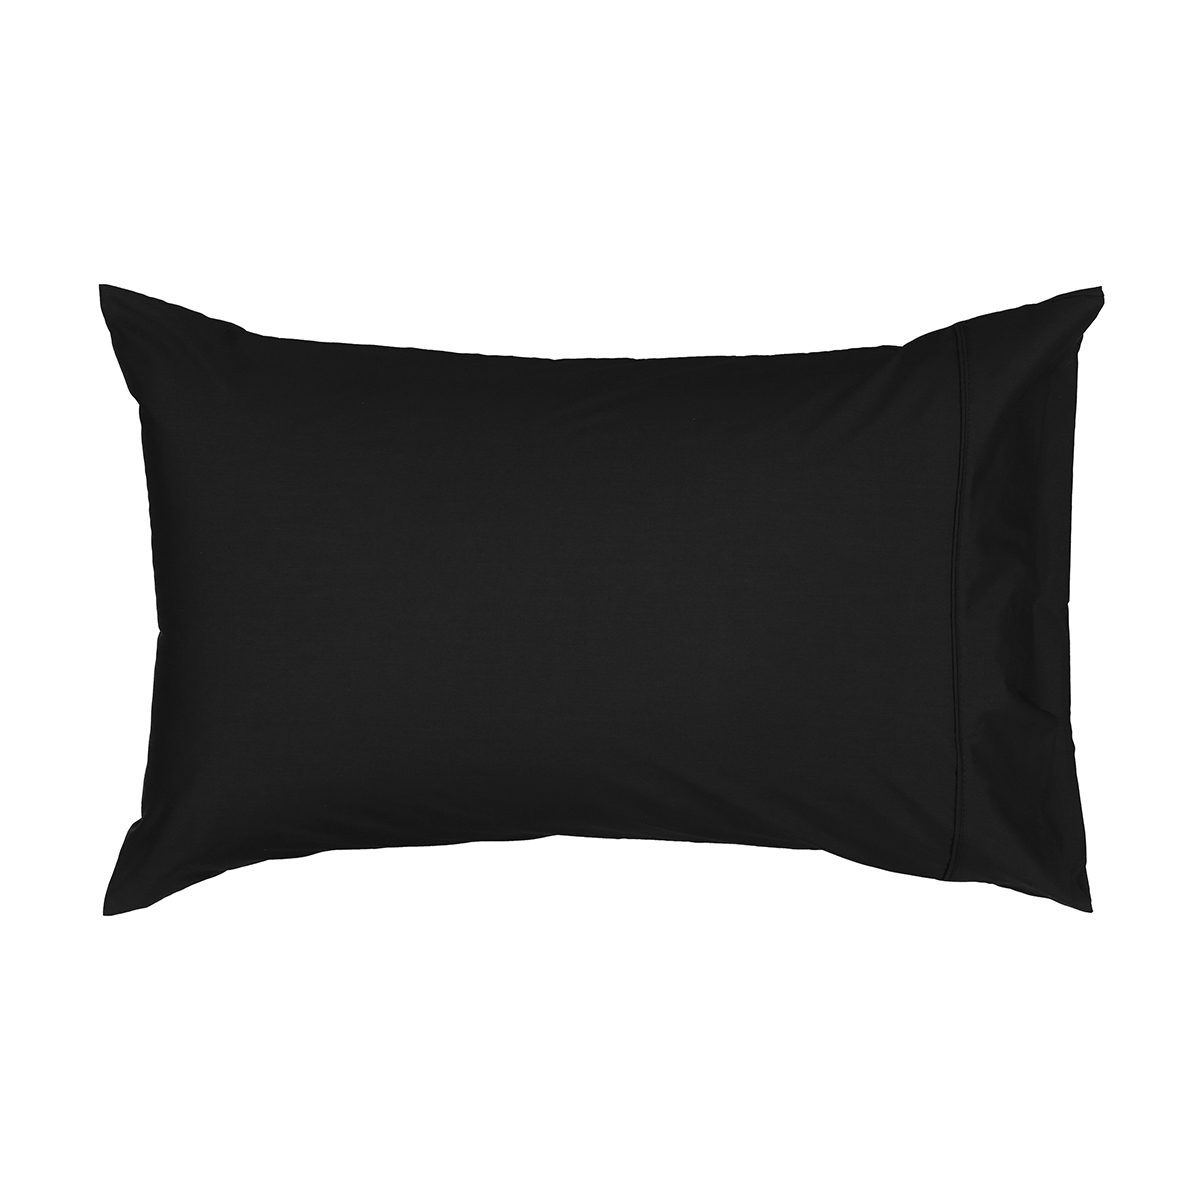 225 Thread Count Pillowcase - Black | Kmart